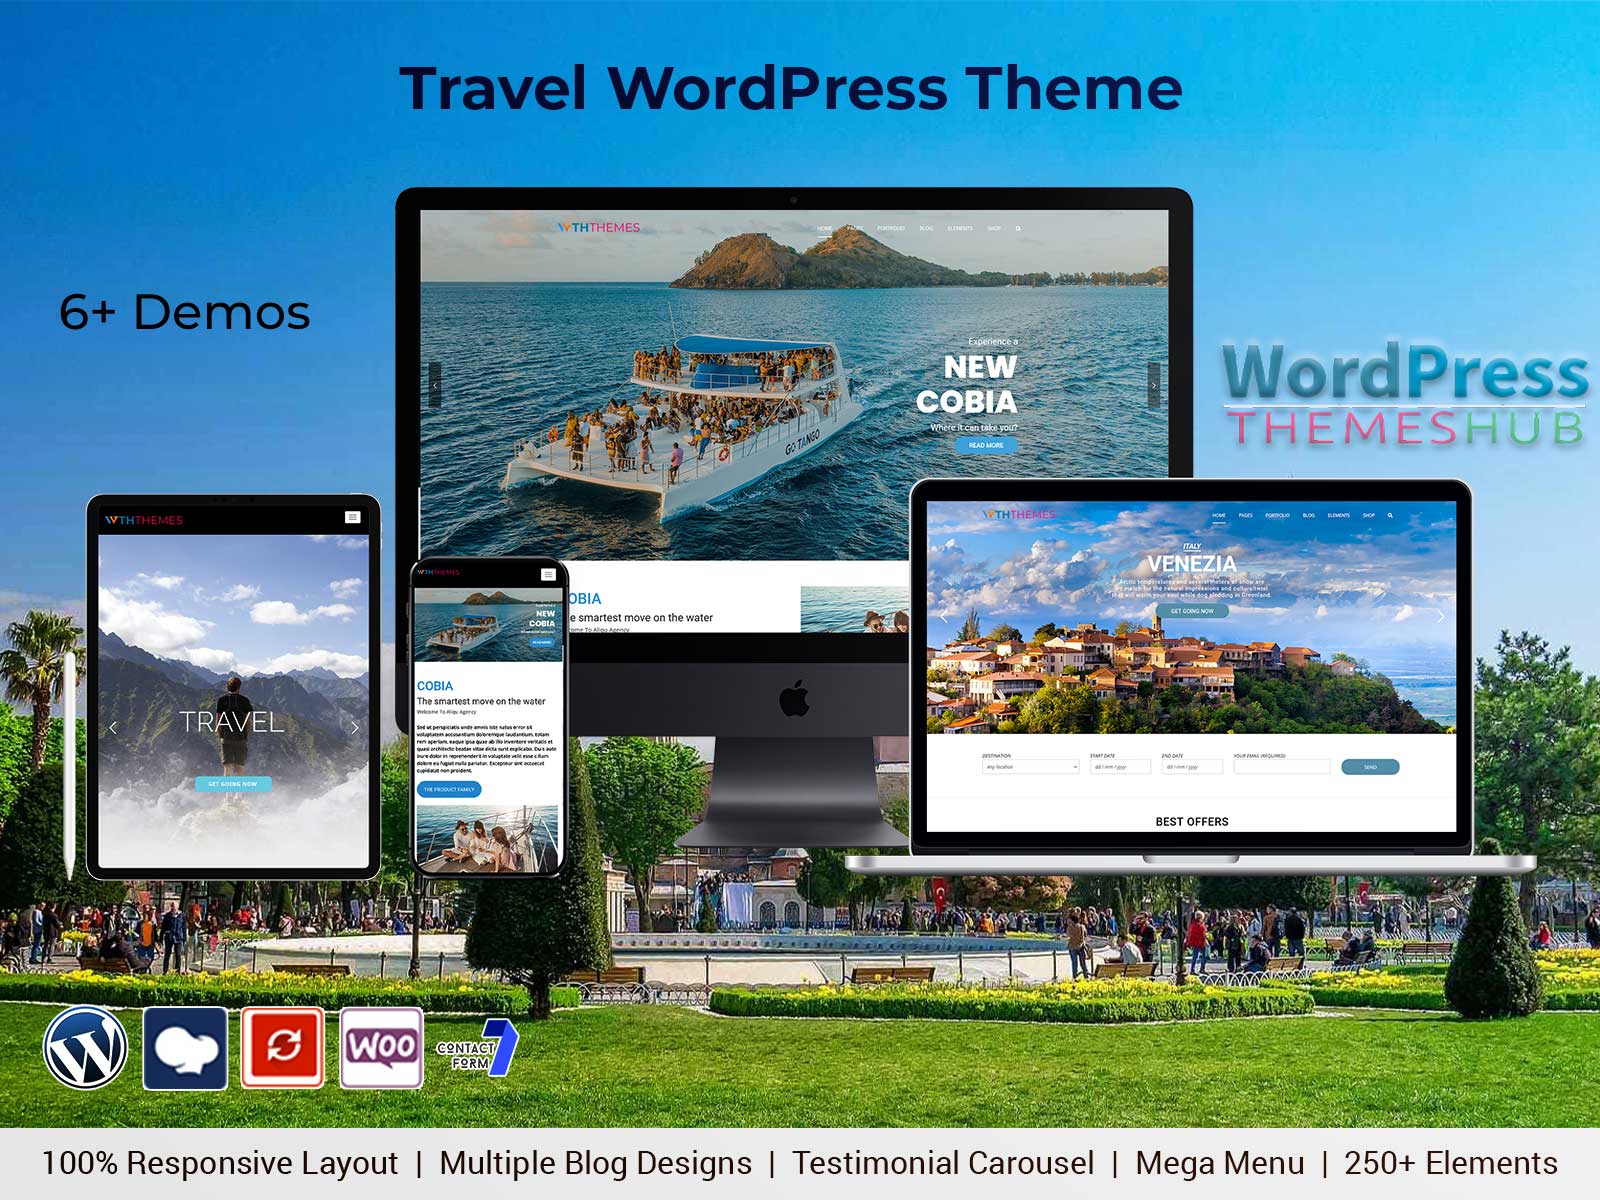 Best Travel WordPress Theme To Make Travel Websites